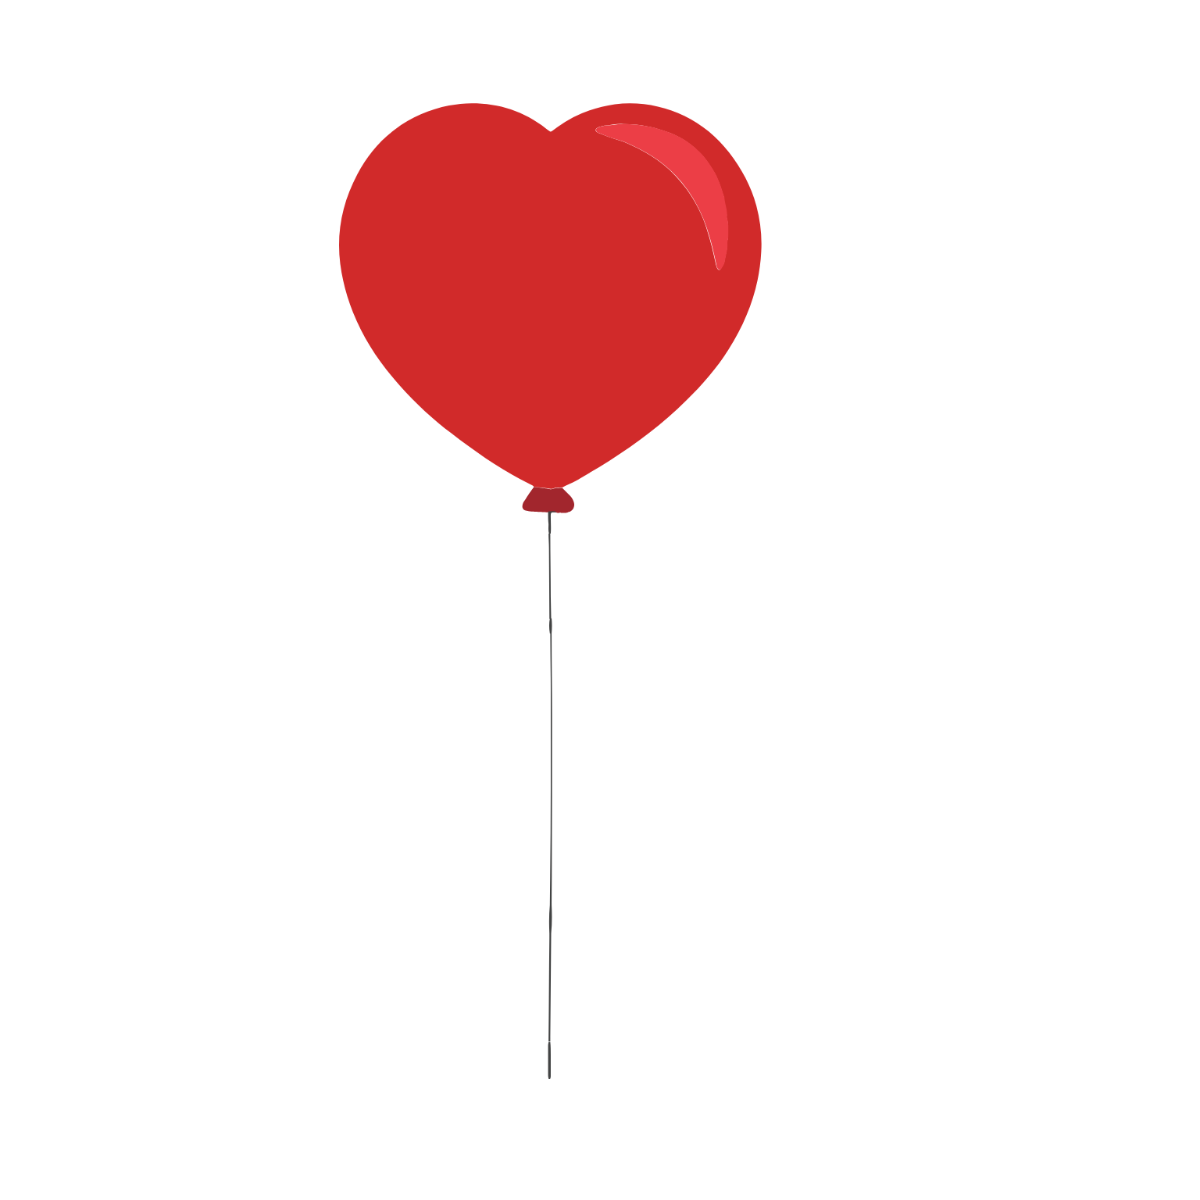 Red Heart Balloon Clipart Template